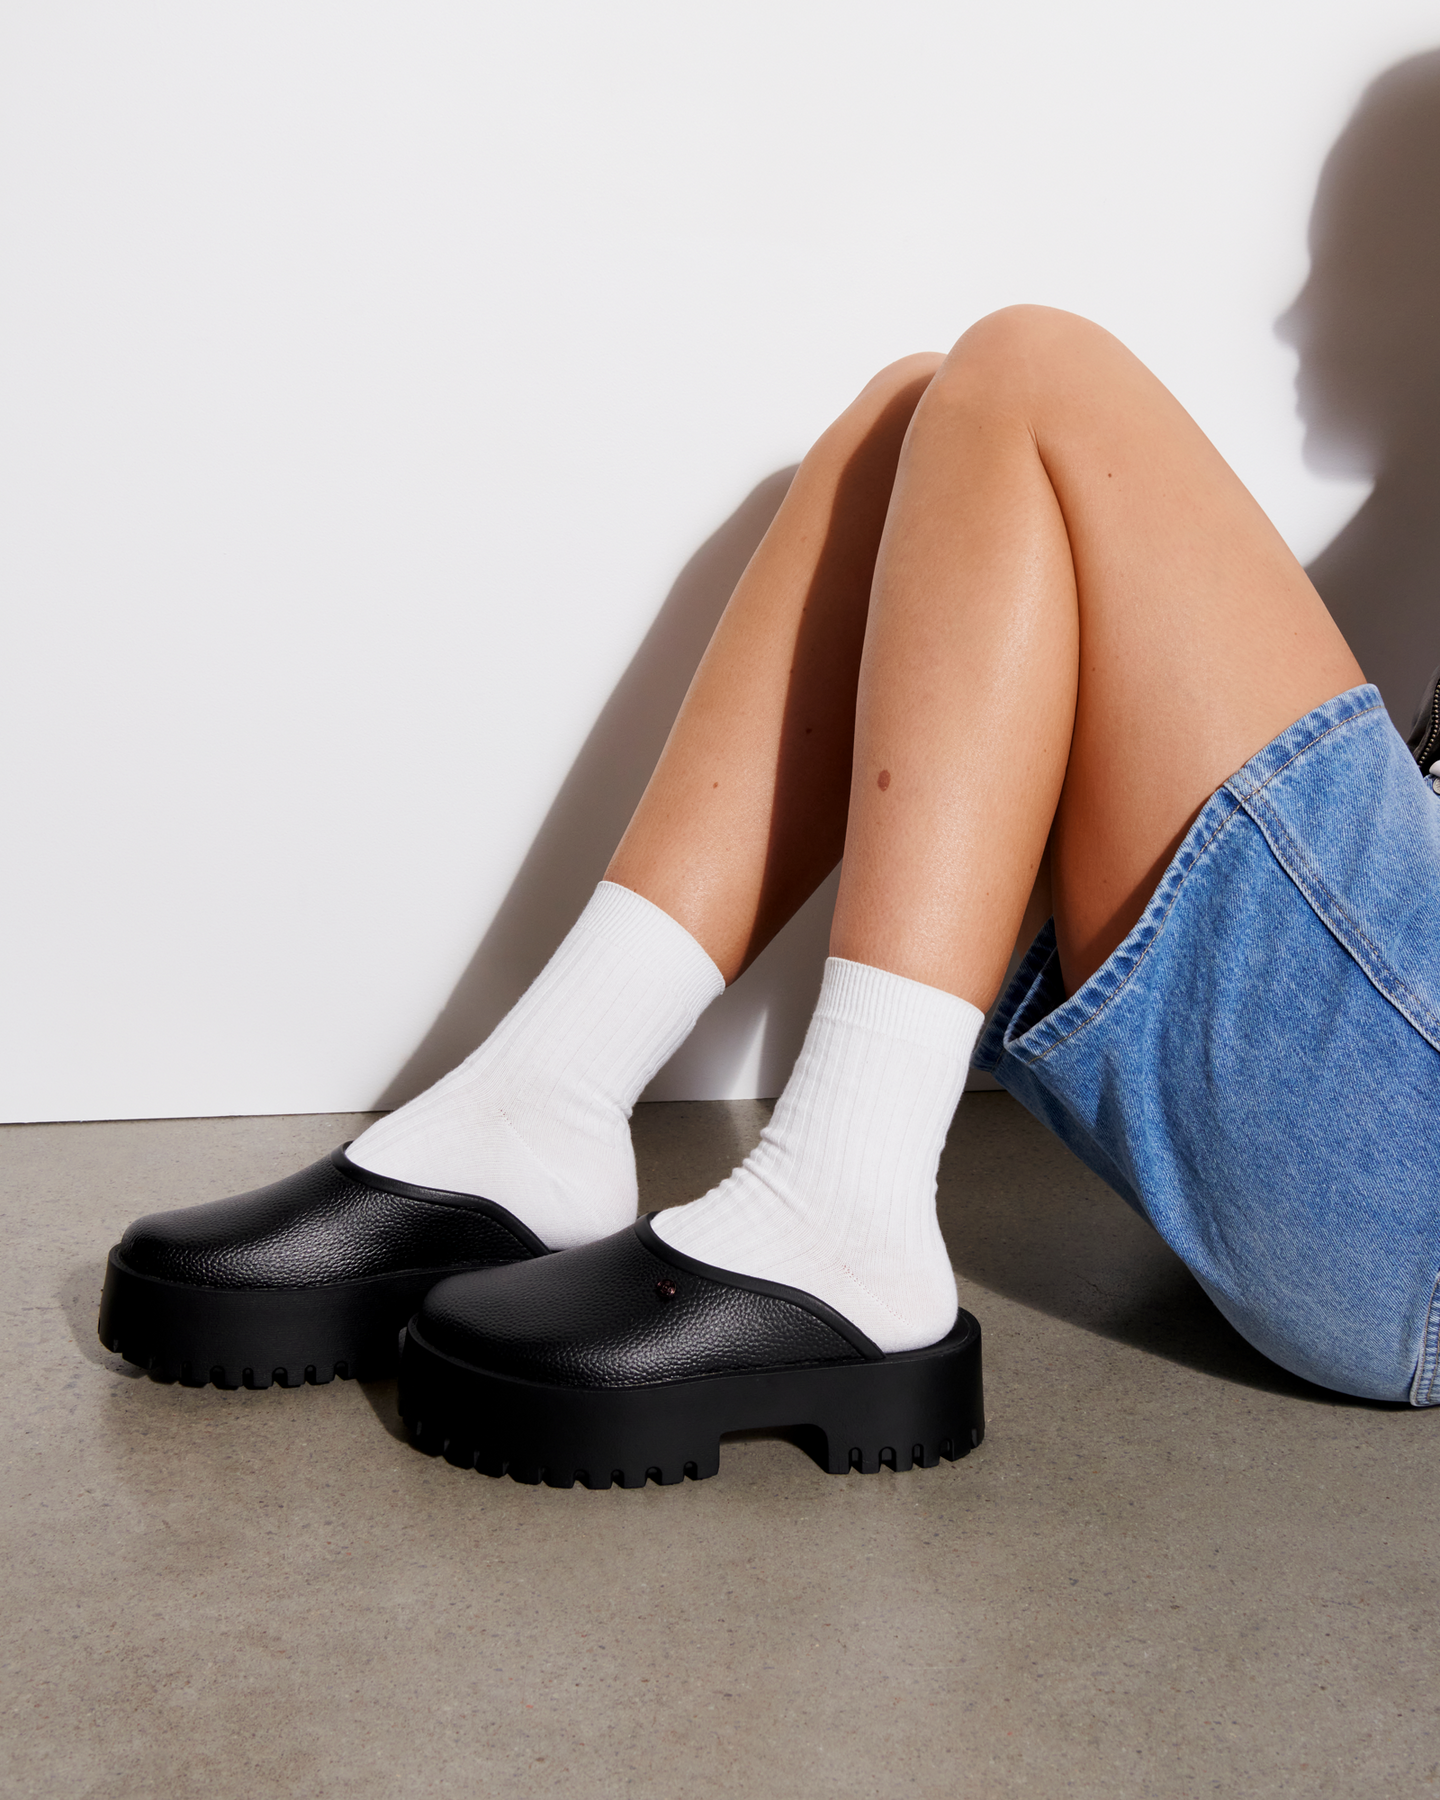 Therapy Shoes Zomp Black PVC, Women's Clogs, Flats